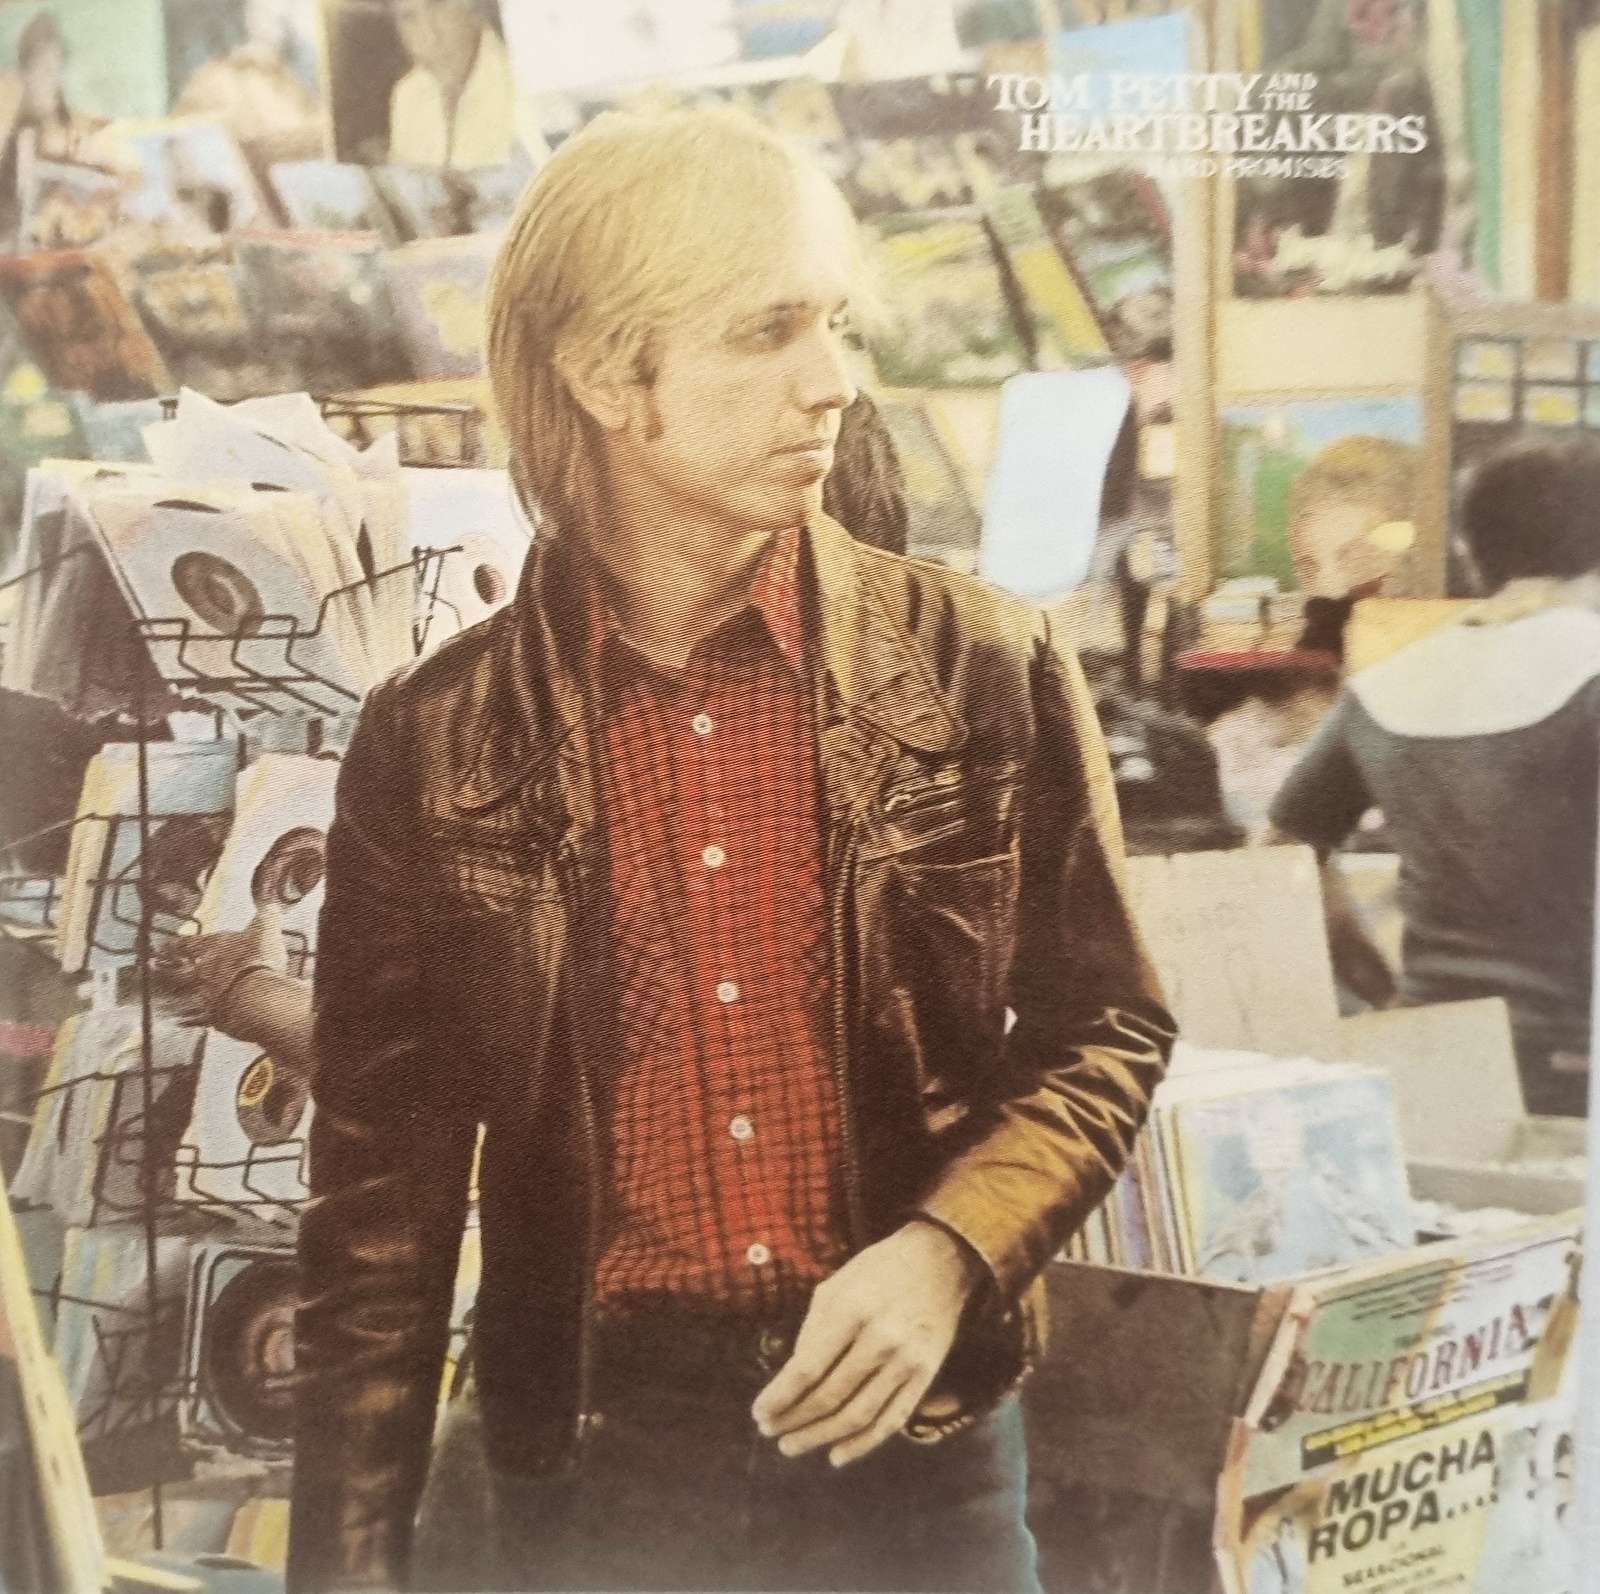 Tom Petty & the Heartbreakers - Hard Promises CD